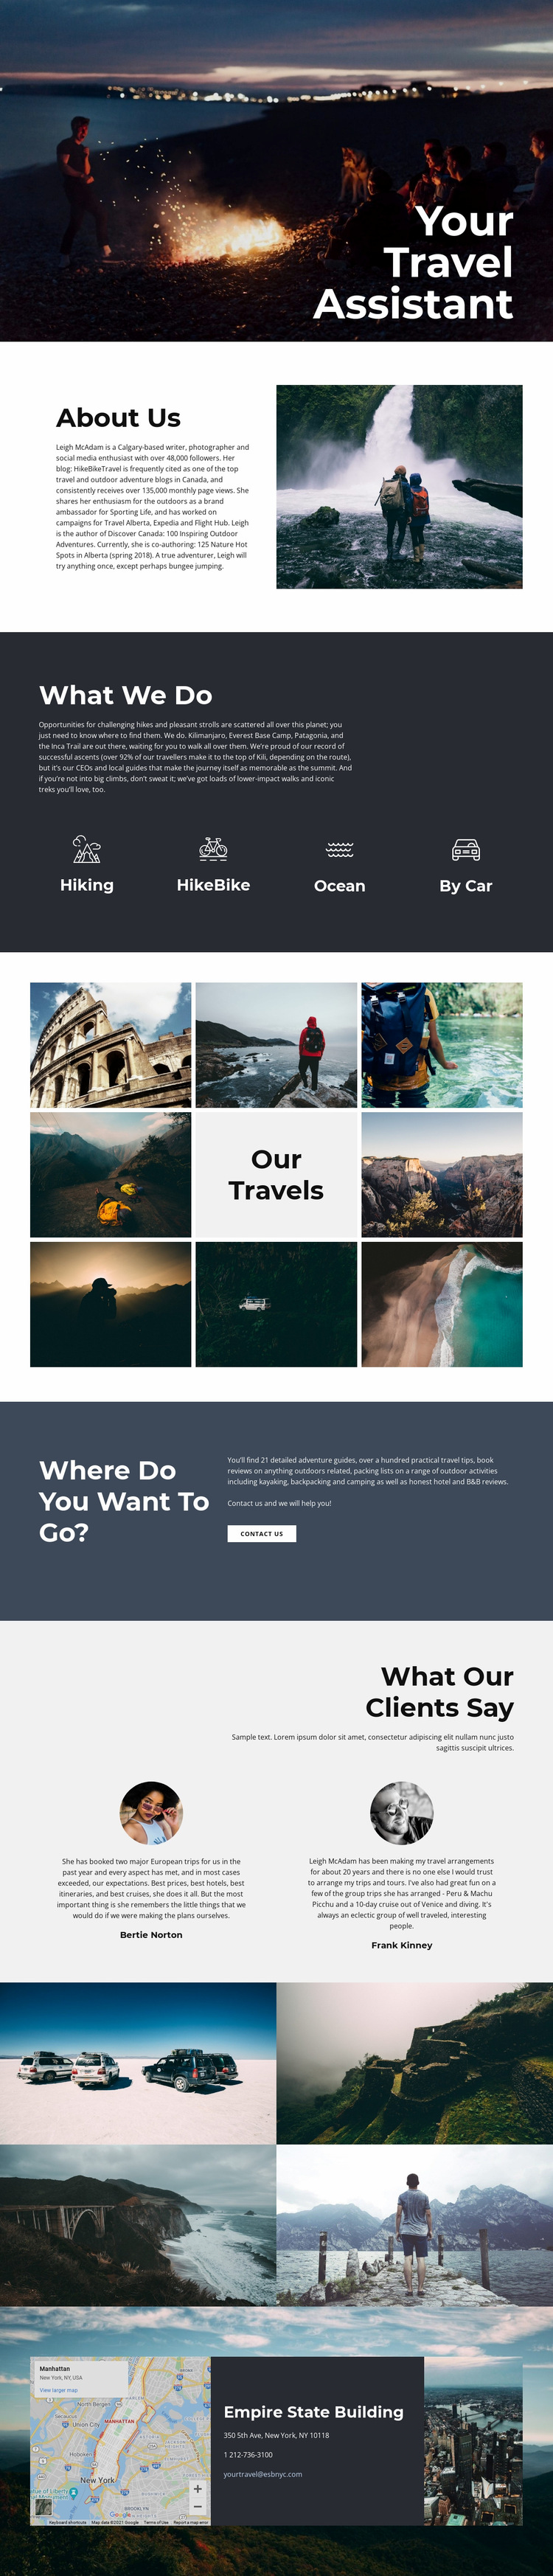 Travel Assistant Website Builder Templates